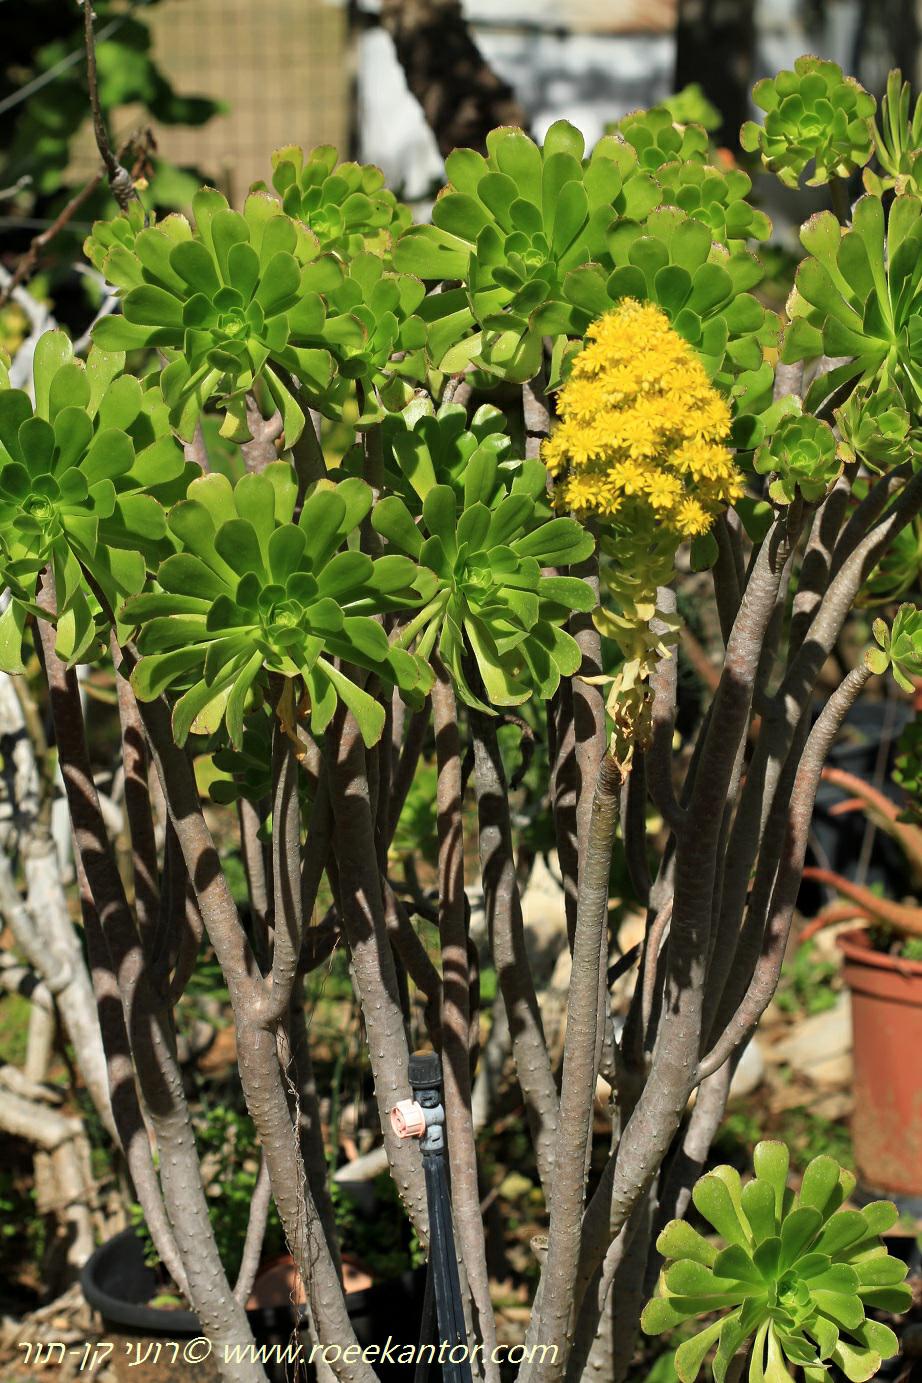 Aeonium arboreum - Tree Aeonium,, Tree Houseleek, Irish Rose, נצחה שיחית, נצחה שיחית